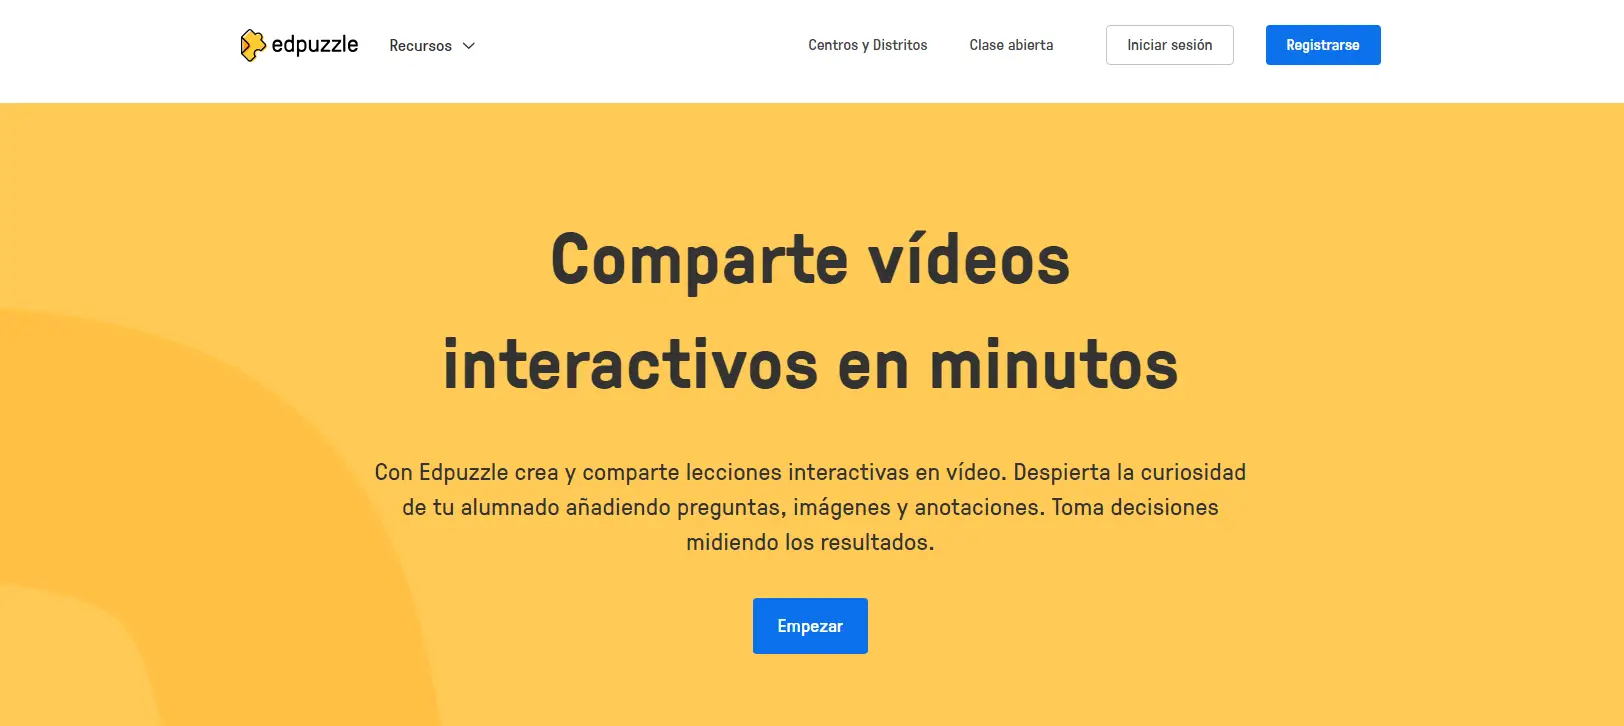 EdPuzzle Aprendizaje Interactivo en Video